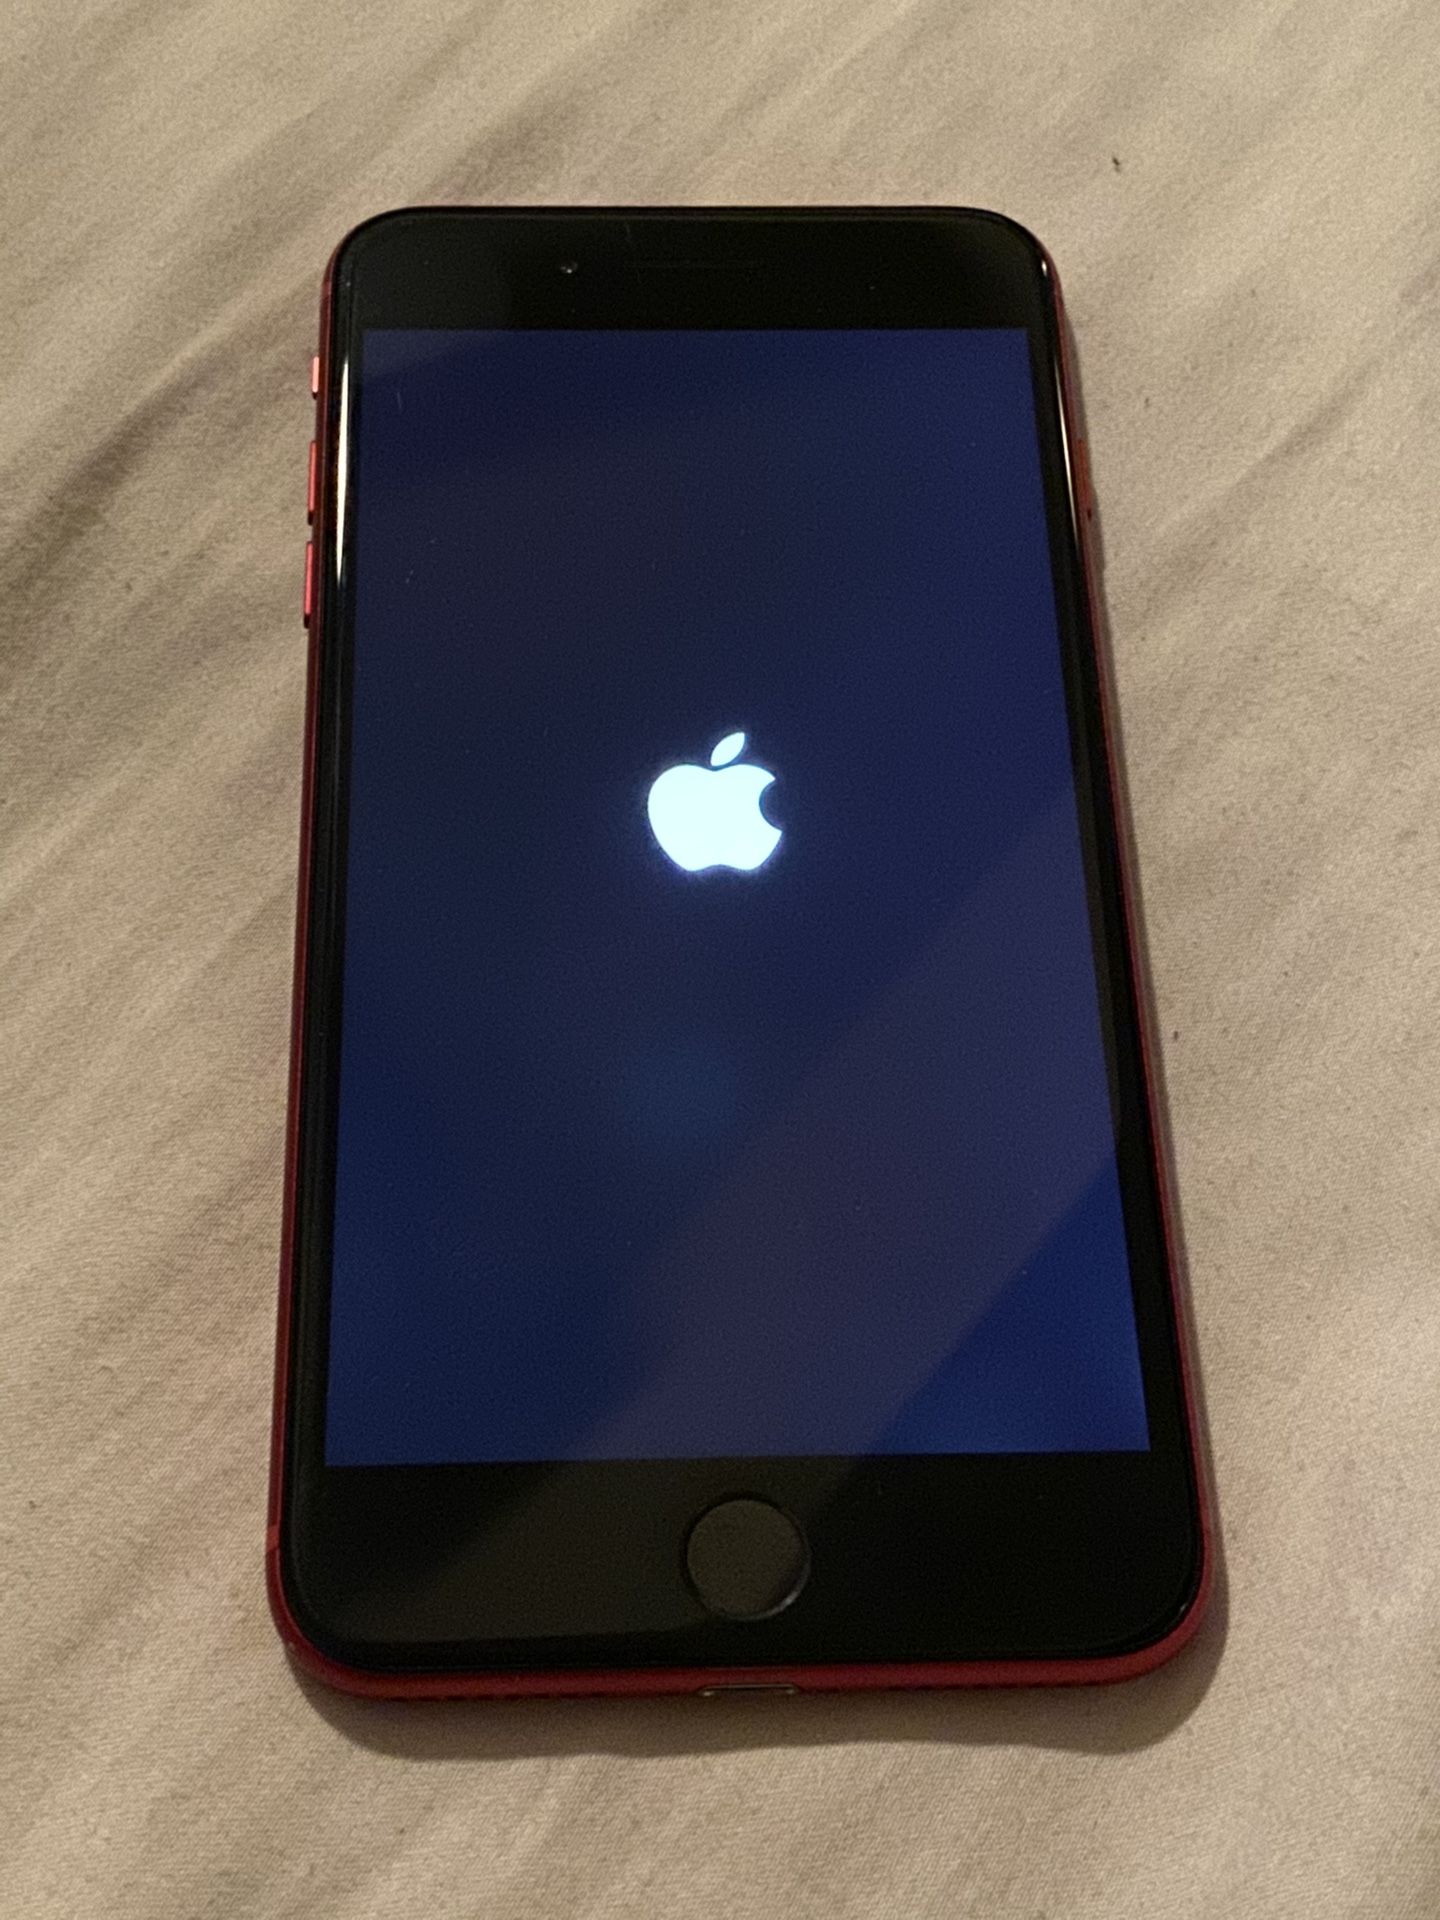 Clean iPhone 8plus 64gb unlocked